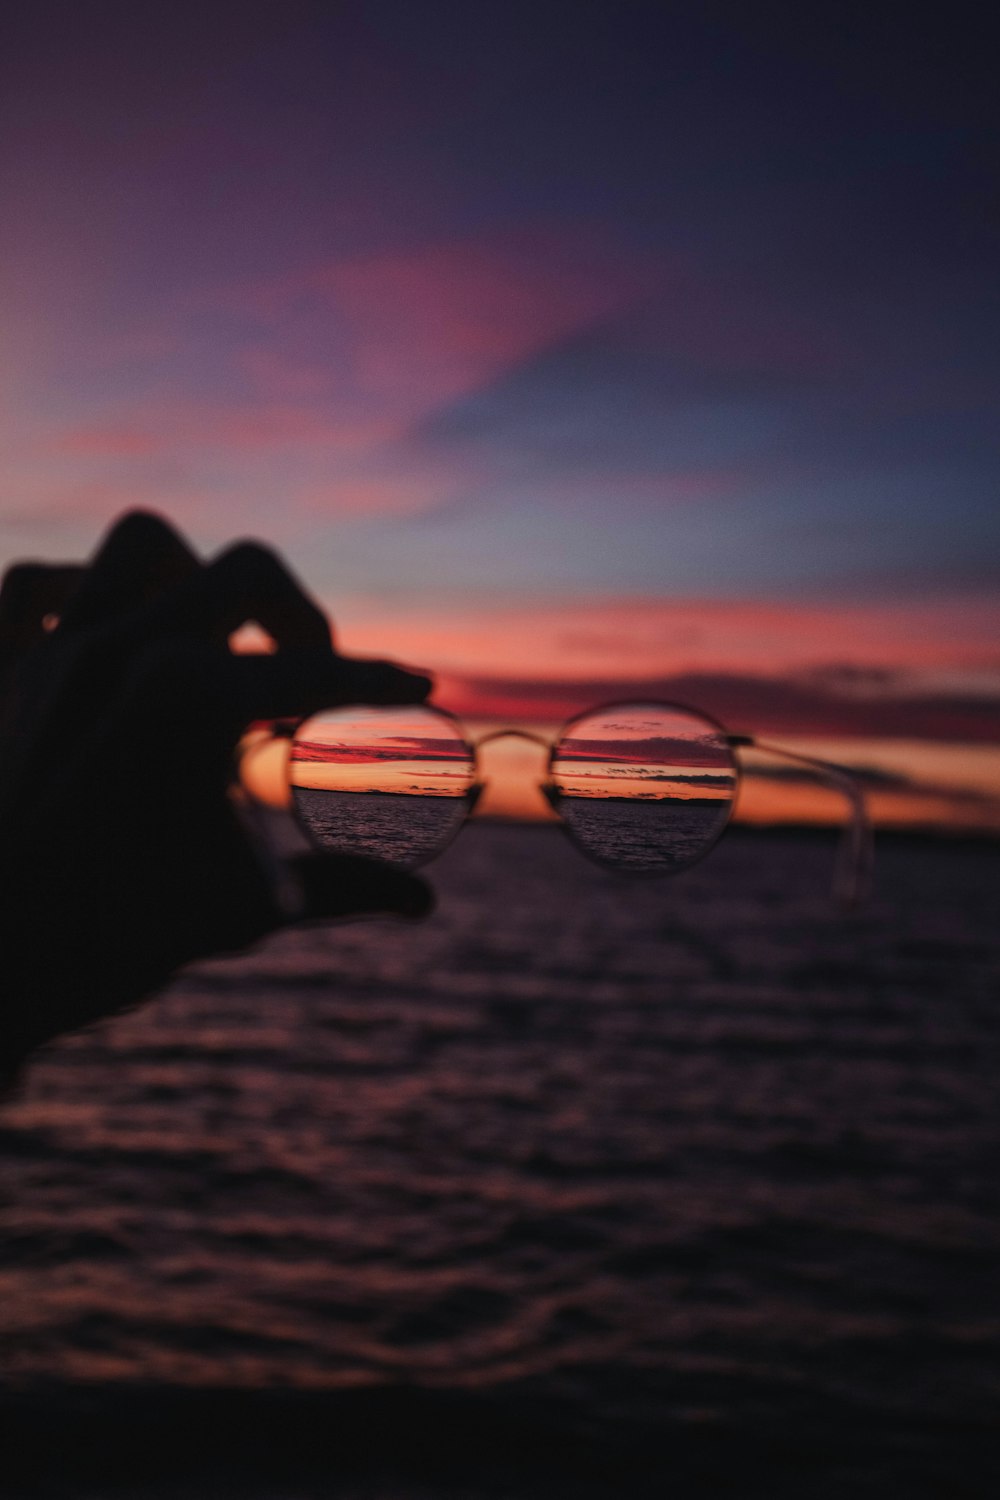 eyeglasses during golden hour